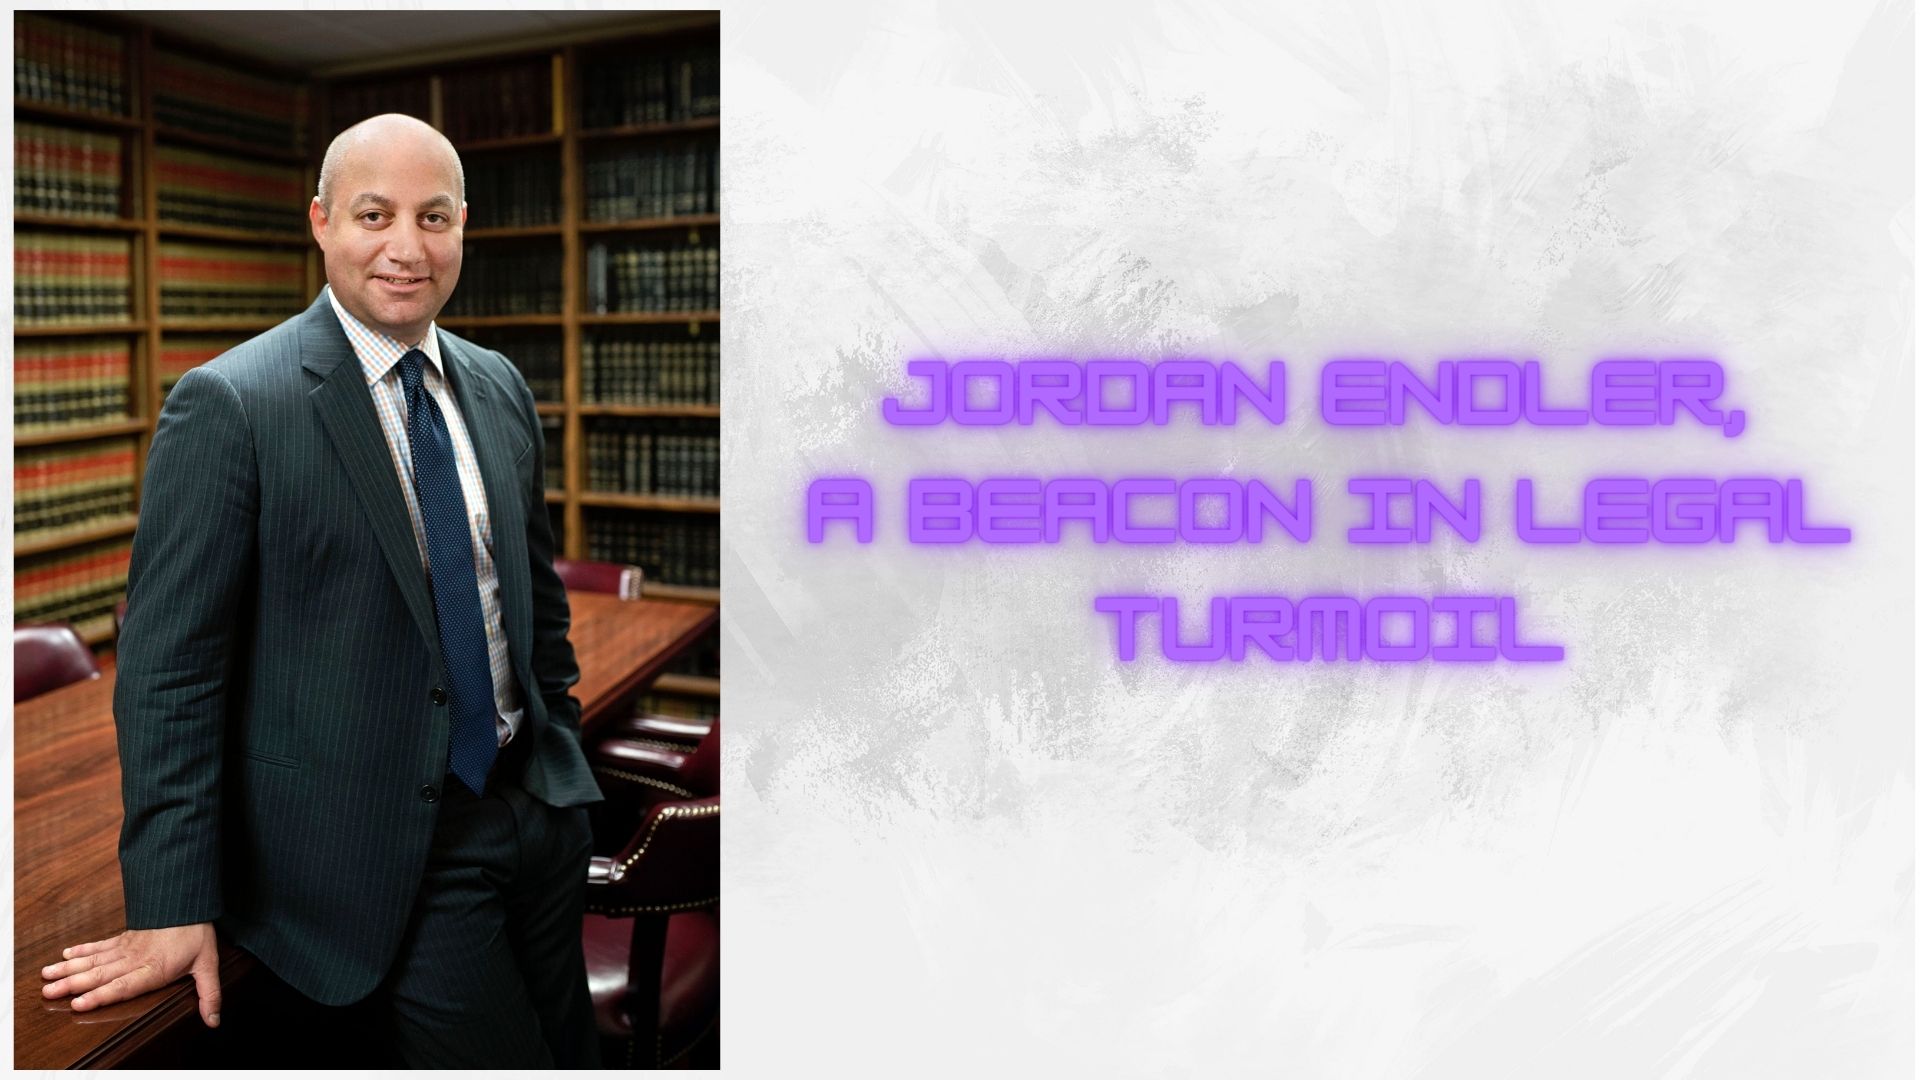 Unraveling the Legal Labyrinth: Jordan Endler, A Beacon in Legal Turmoil